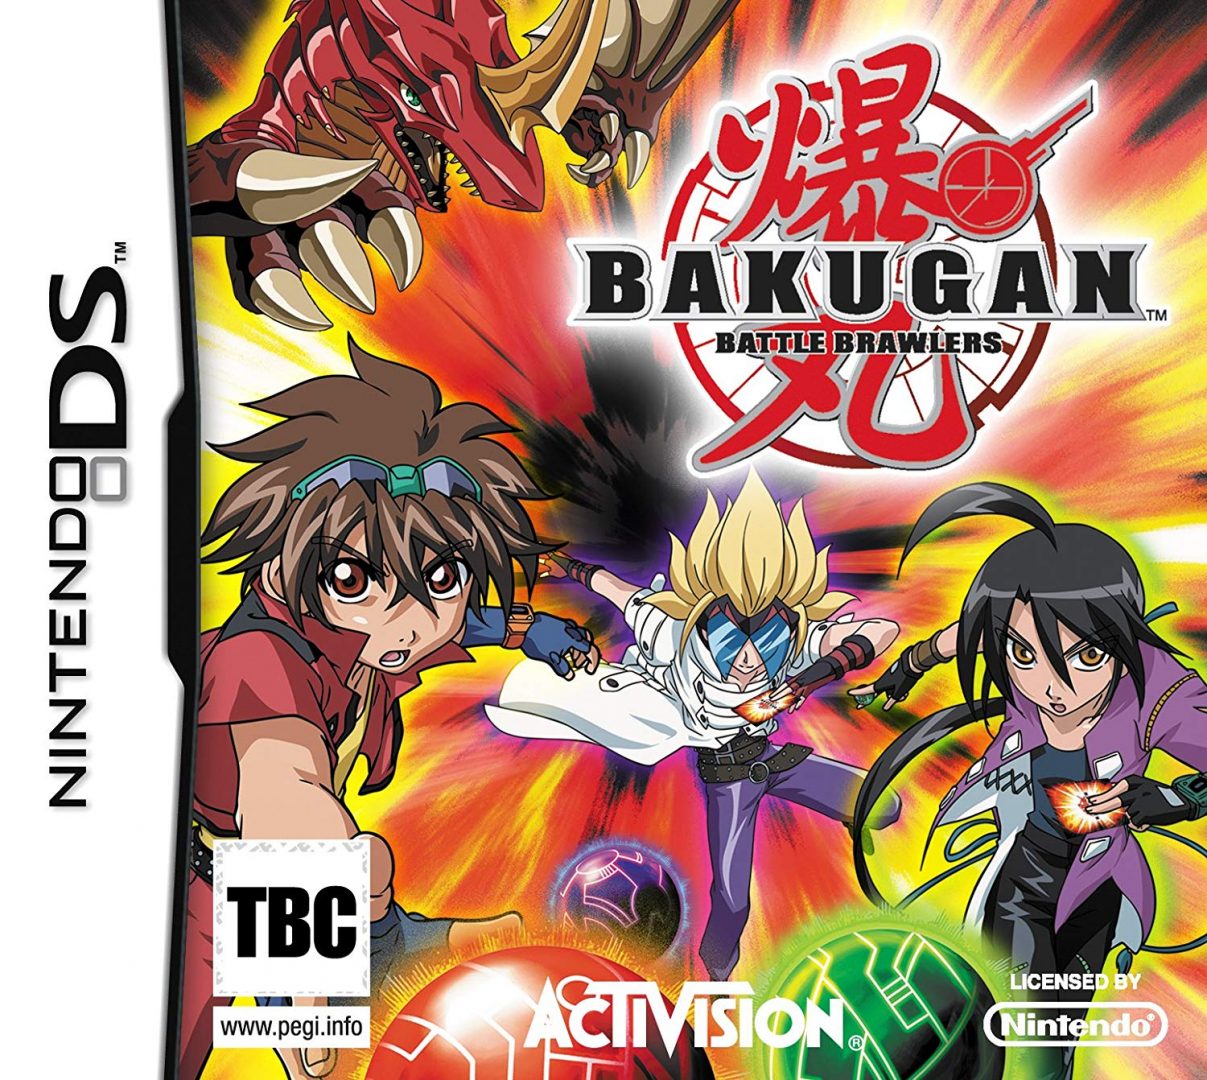 The coverart image of Bakugan Battle Brawlers